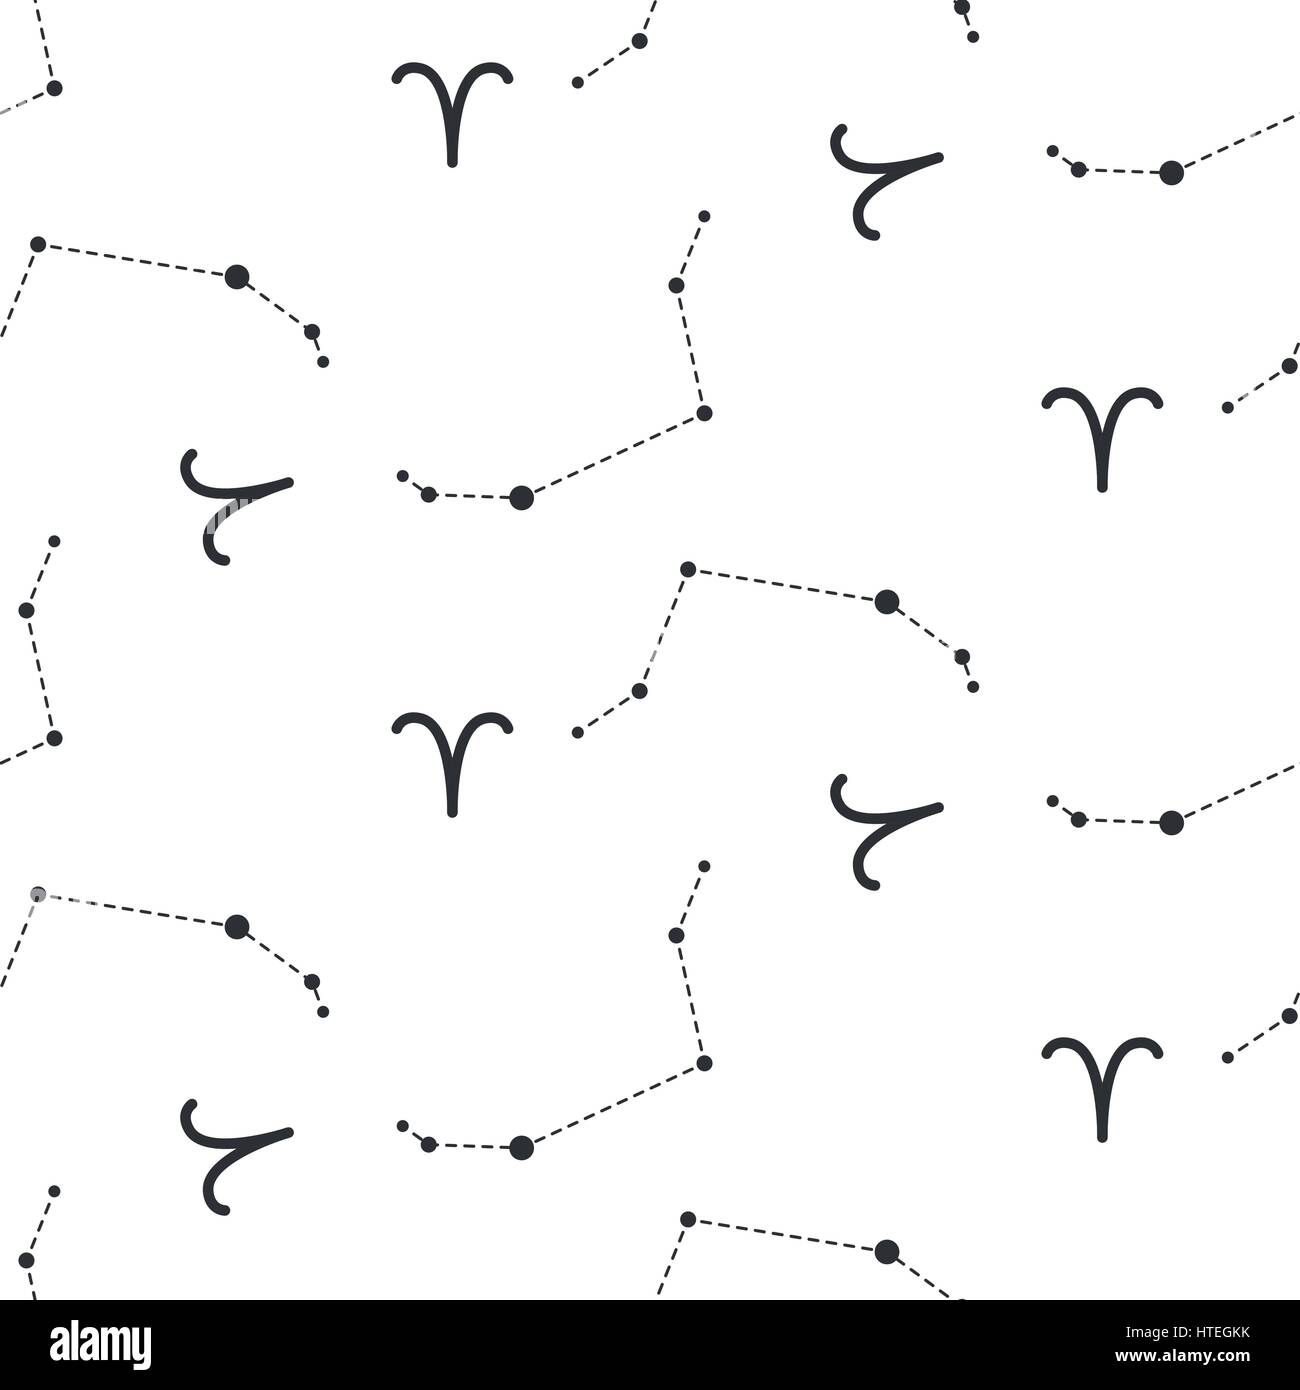 Aries constellation seamless vector pattern Stock Vector Image & Art ...